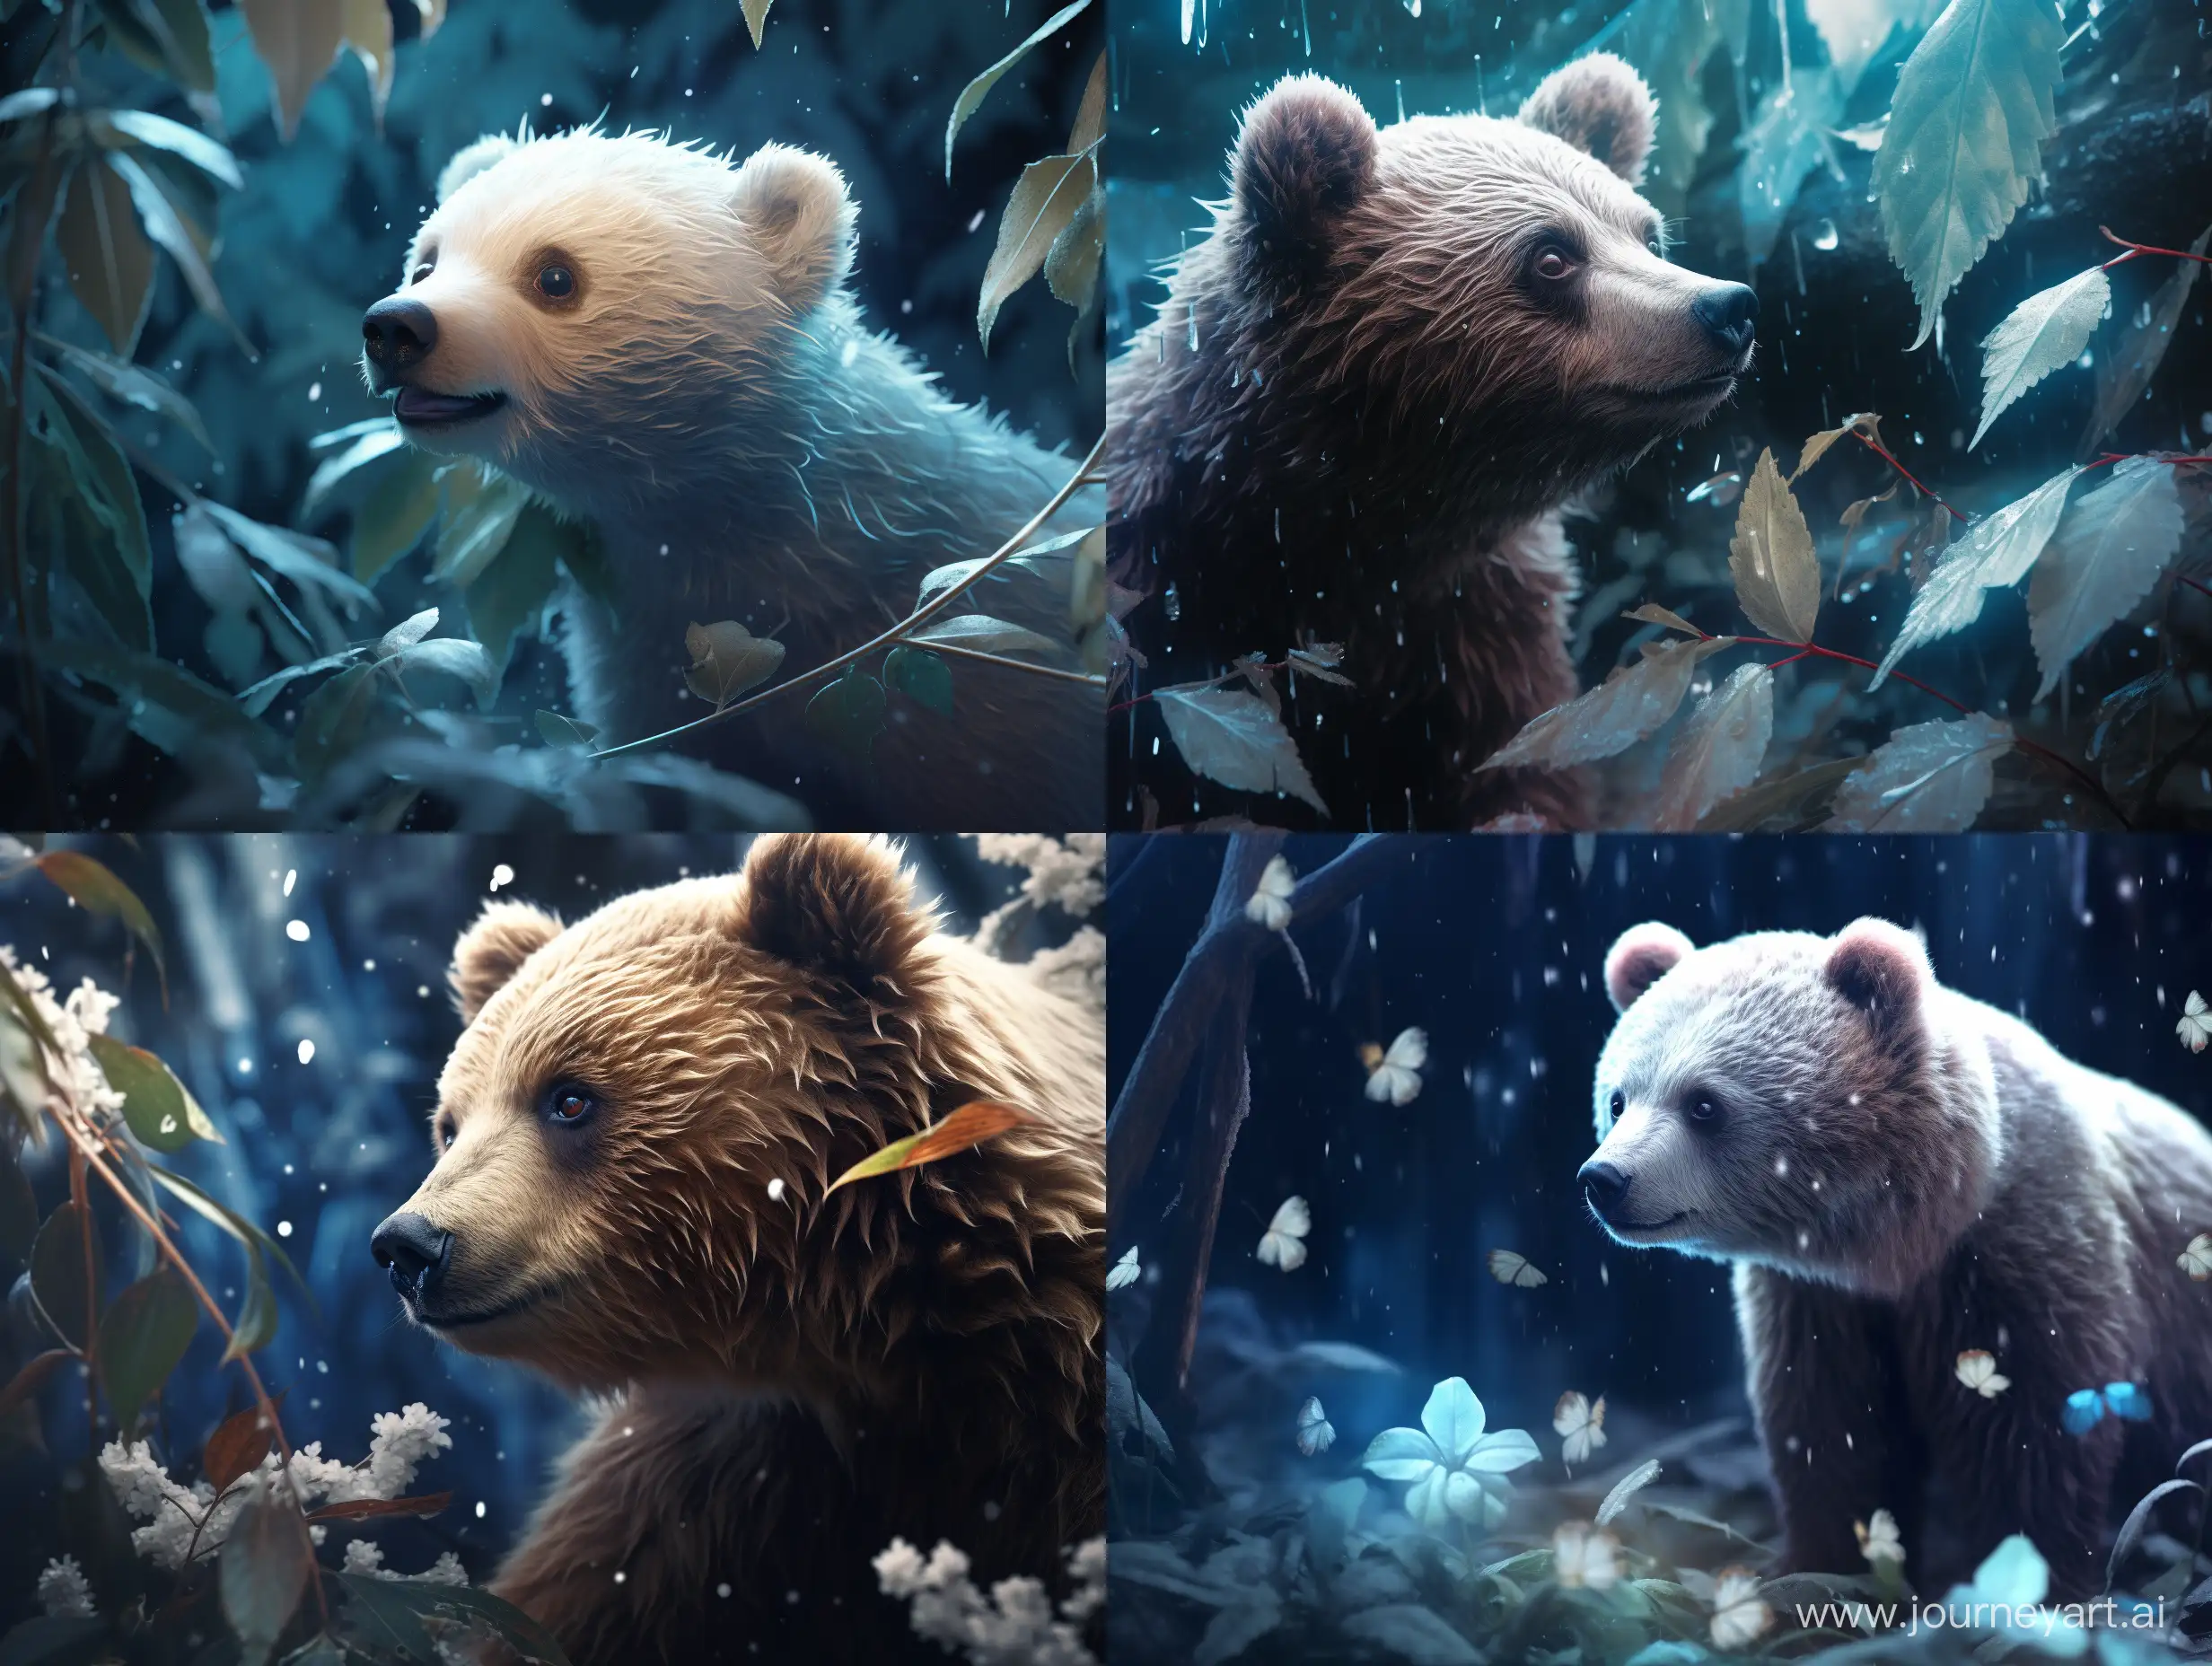 Enchanting-Forest-Macro-Snowfall-and-Baby-Bear-in-Dark-Fantasy-Art